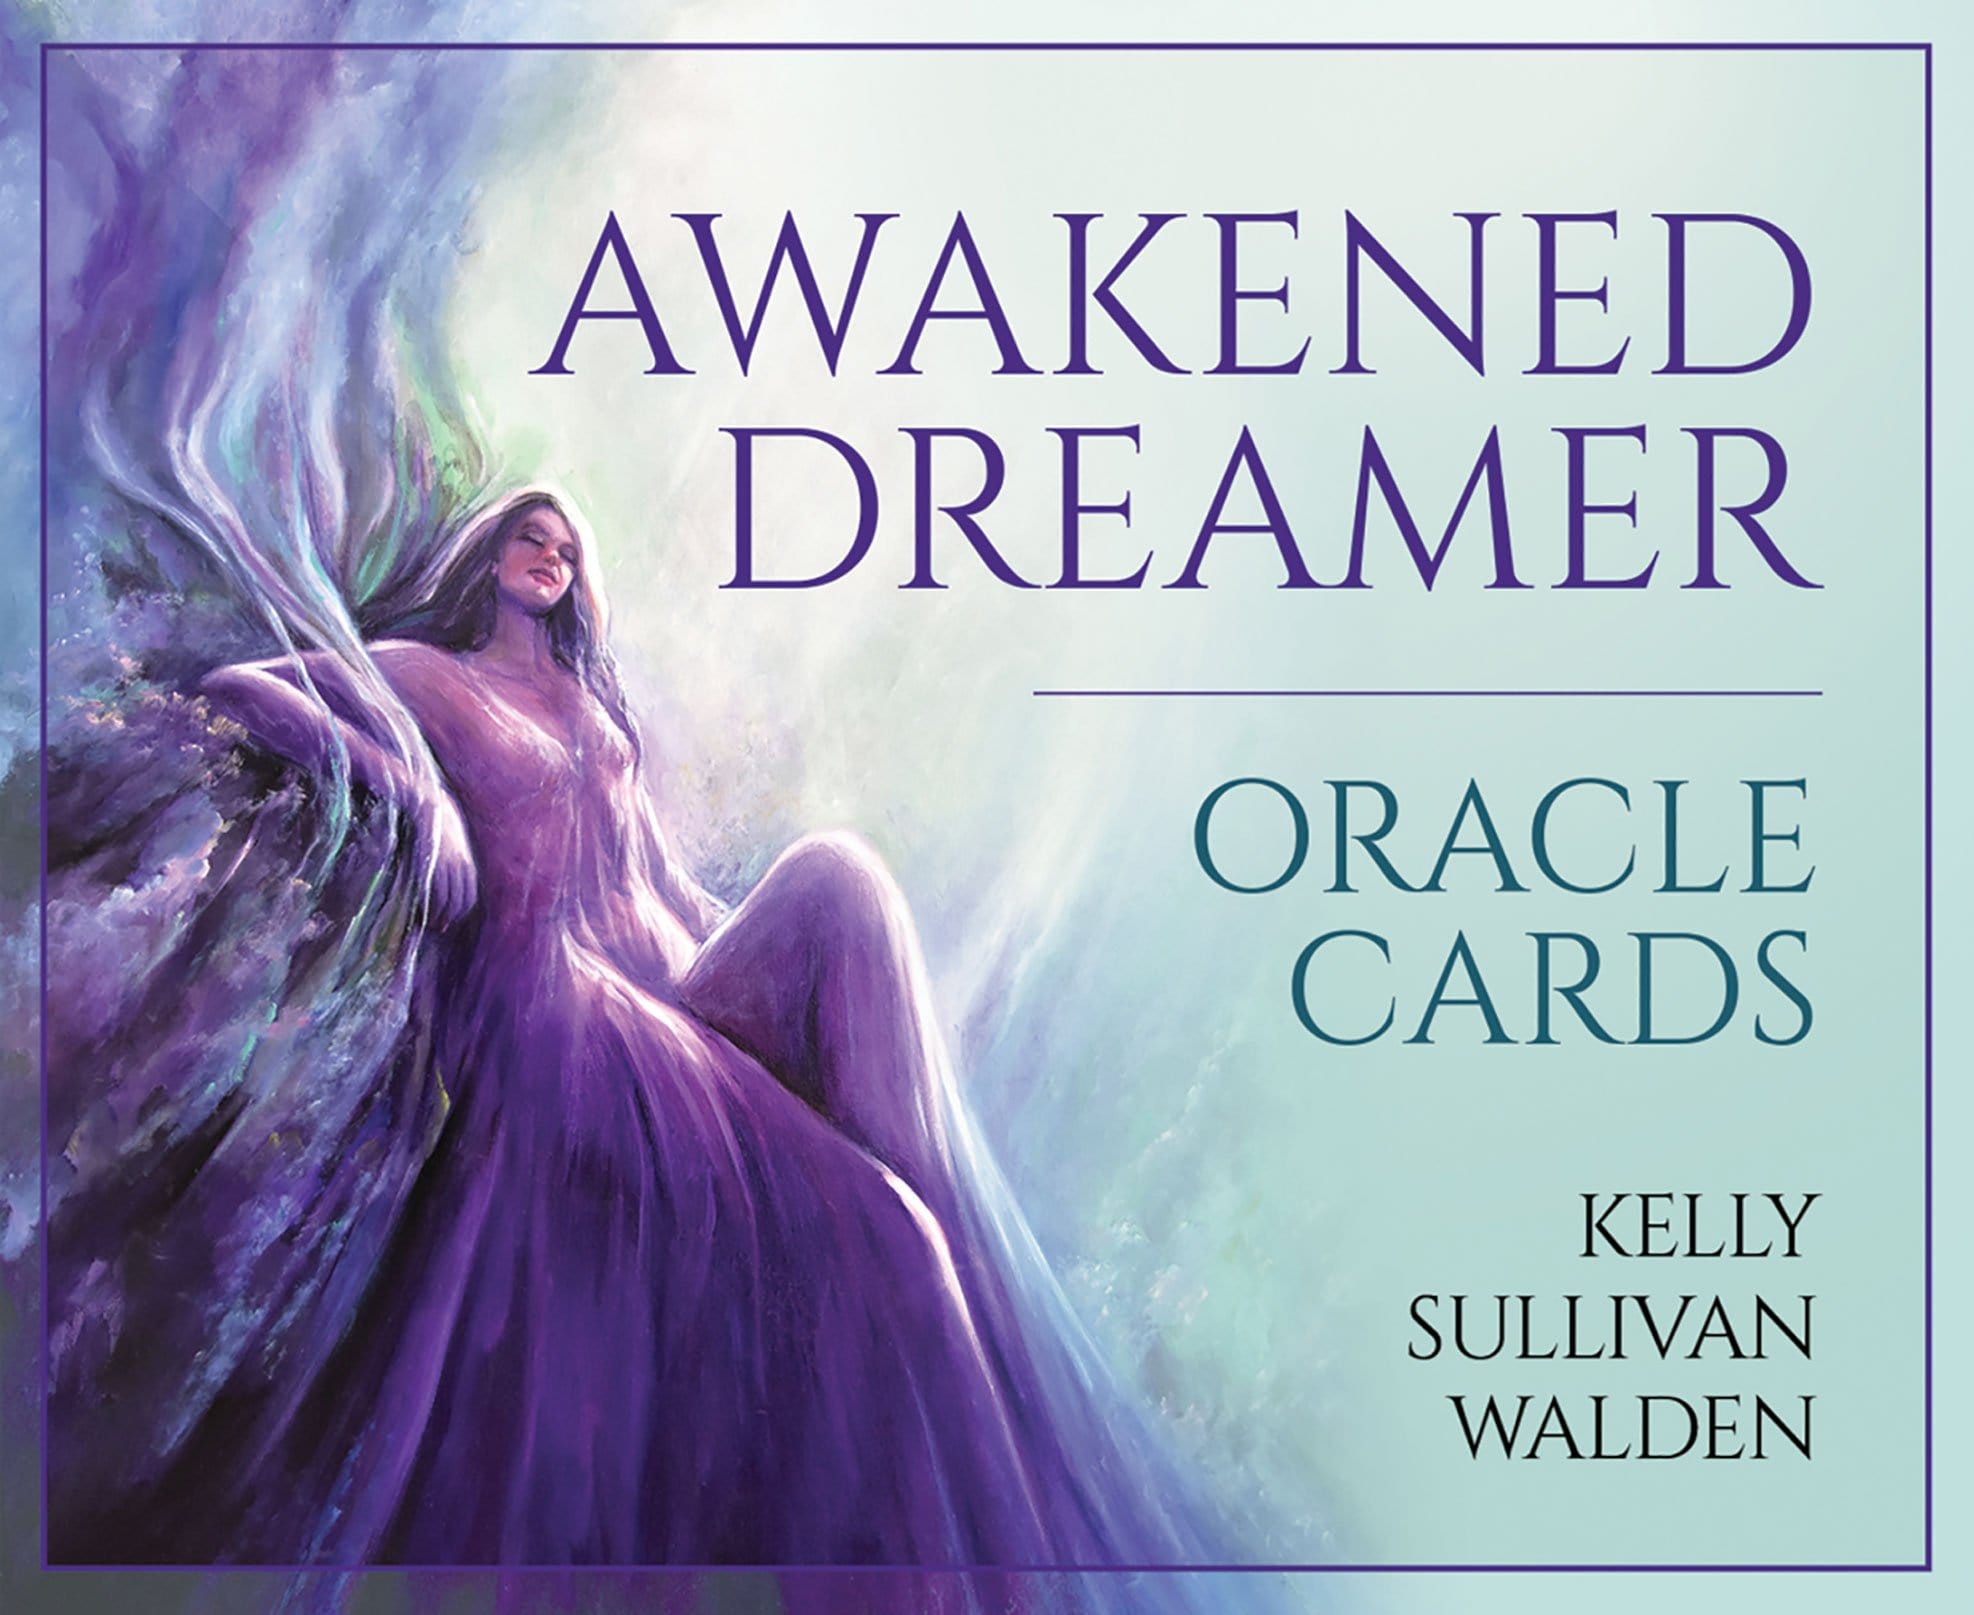 Awakened Dreamer Oracle Cards by Kelly Sullivan Walden